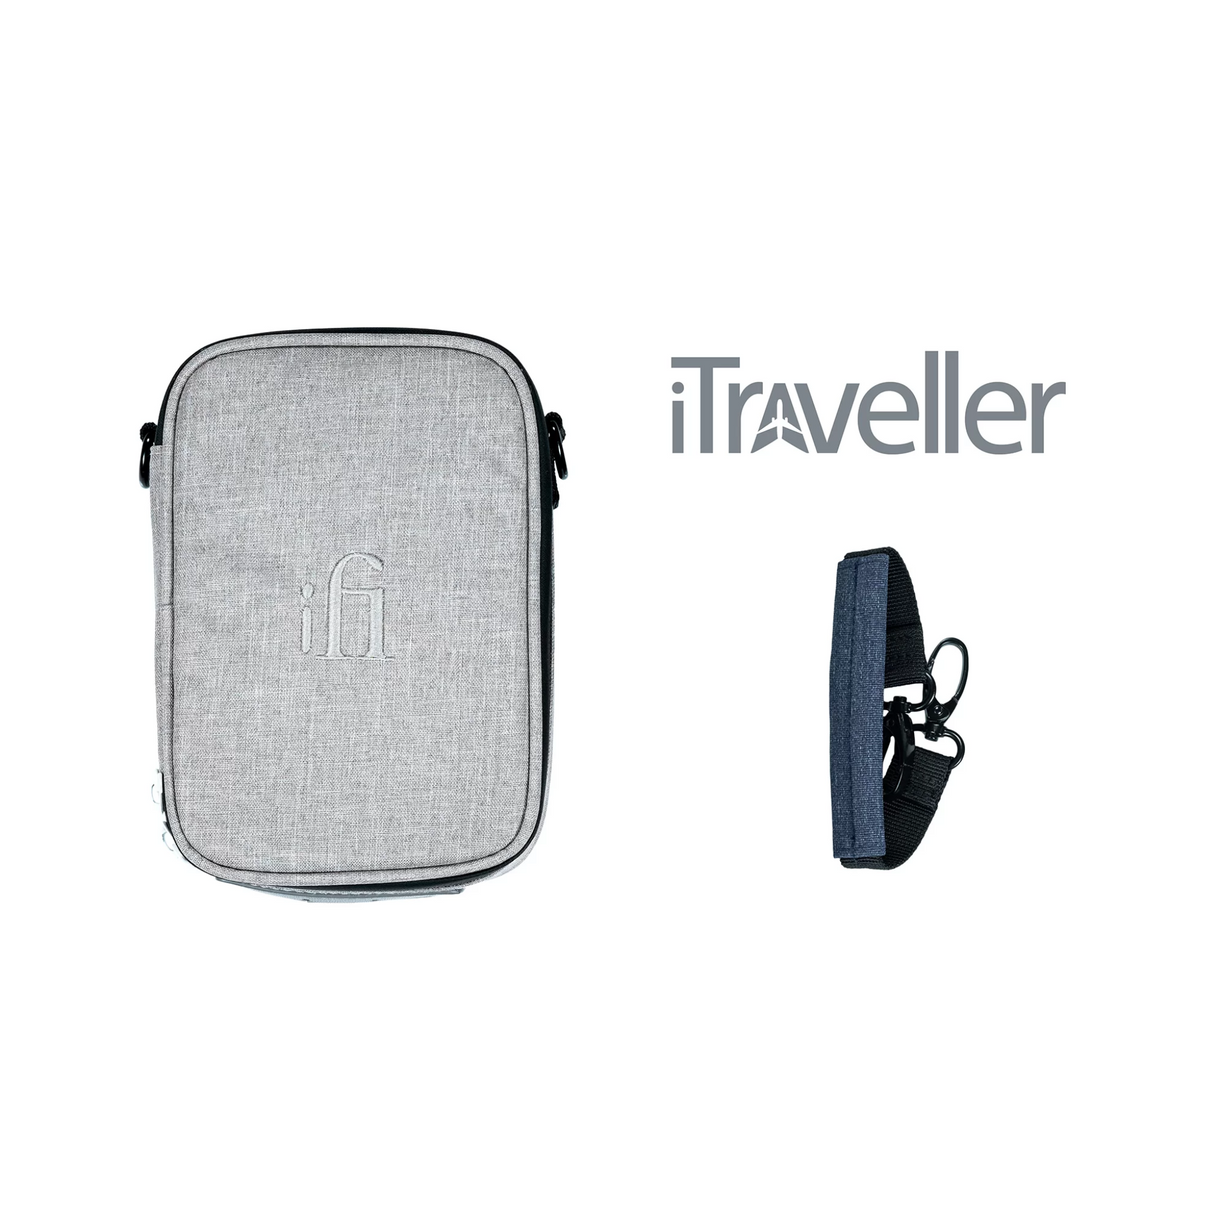 iFi iTraveler DAC+Accessories Carry Case